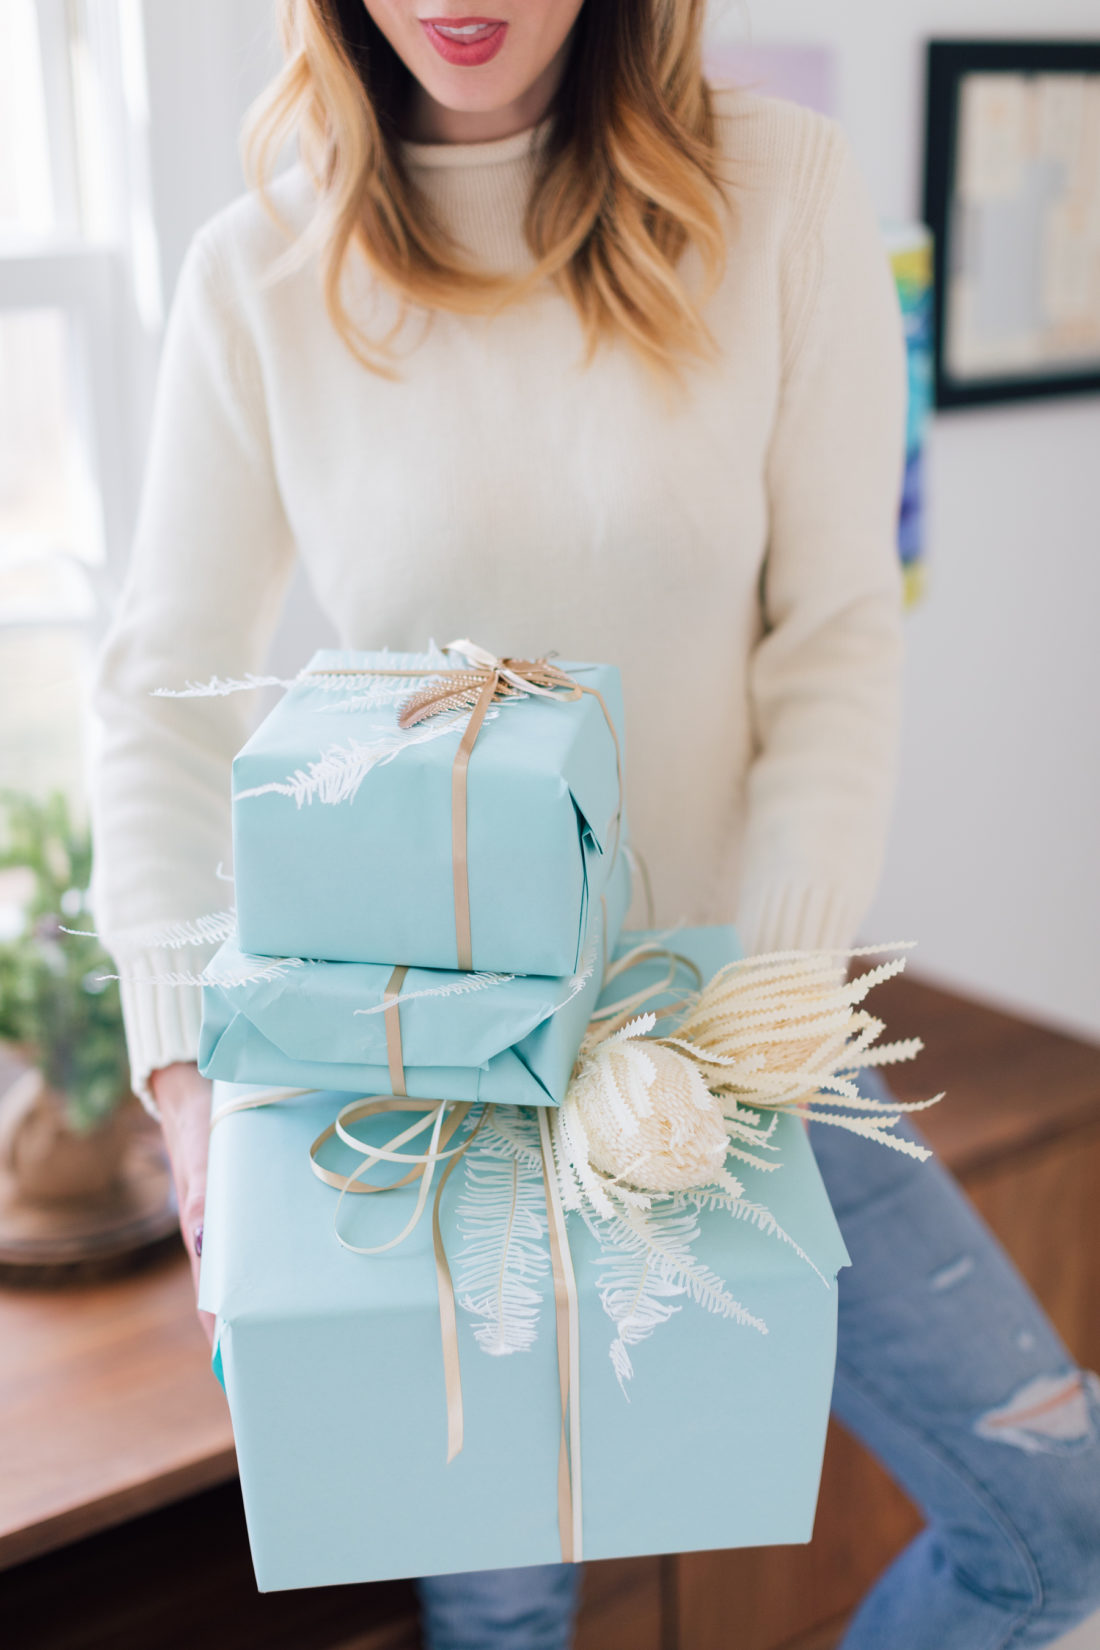 Eva Amurri Martino shares her Holiday Gift Guides for 2018!